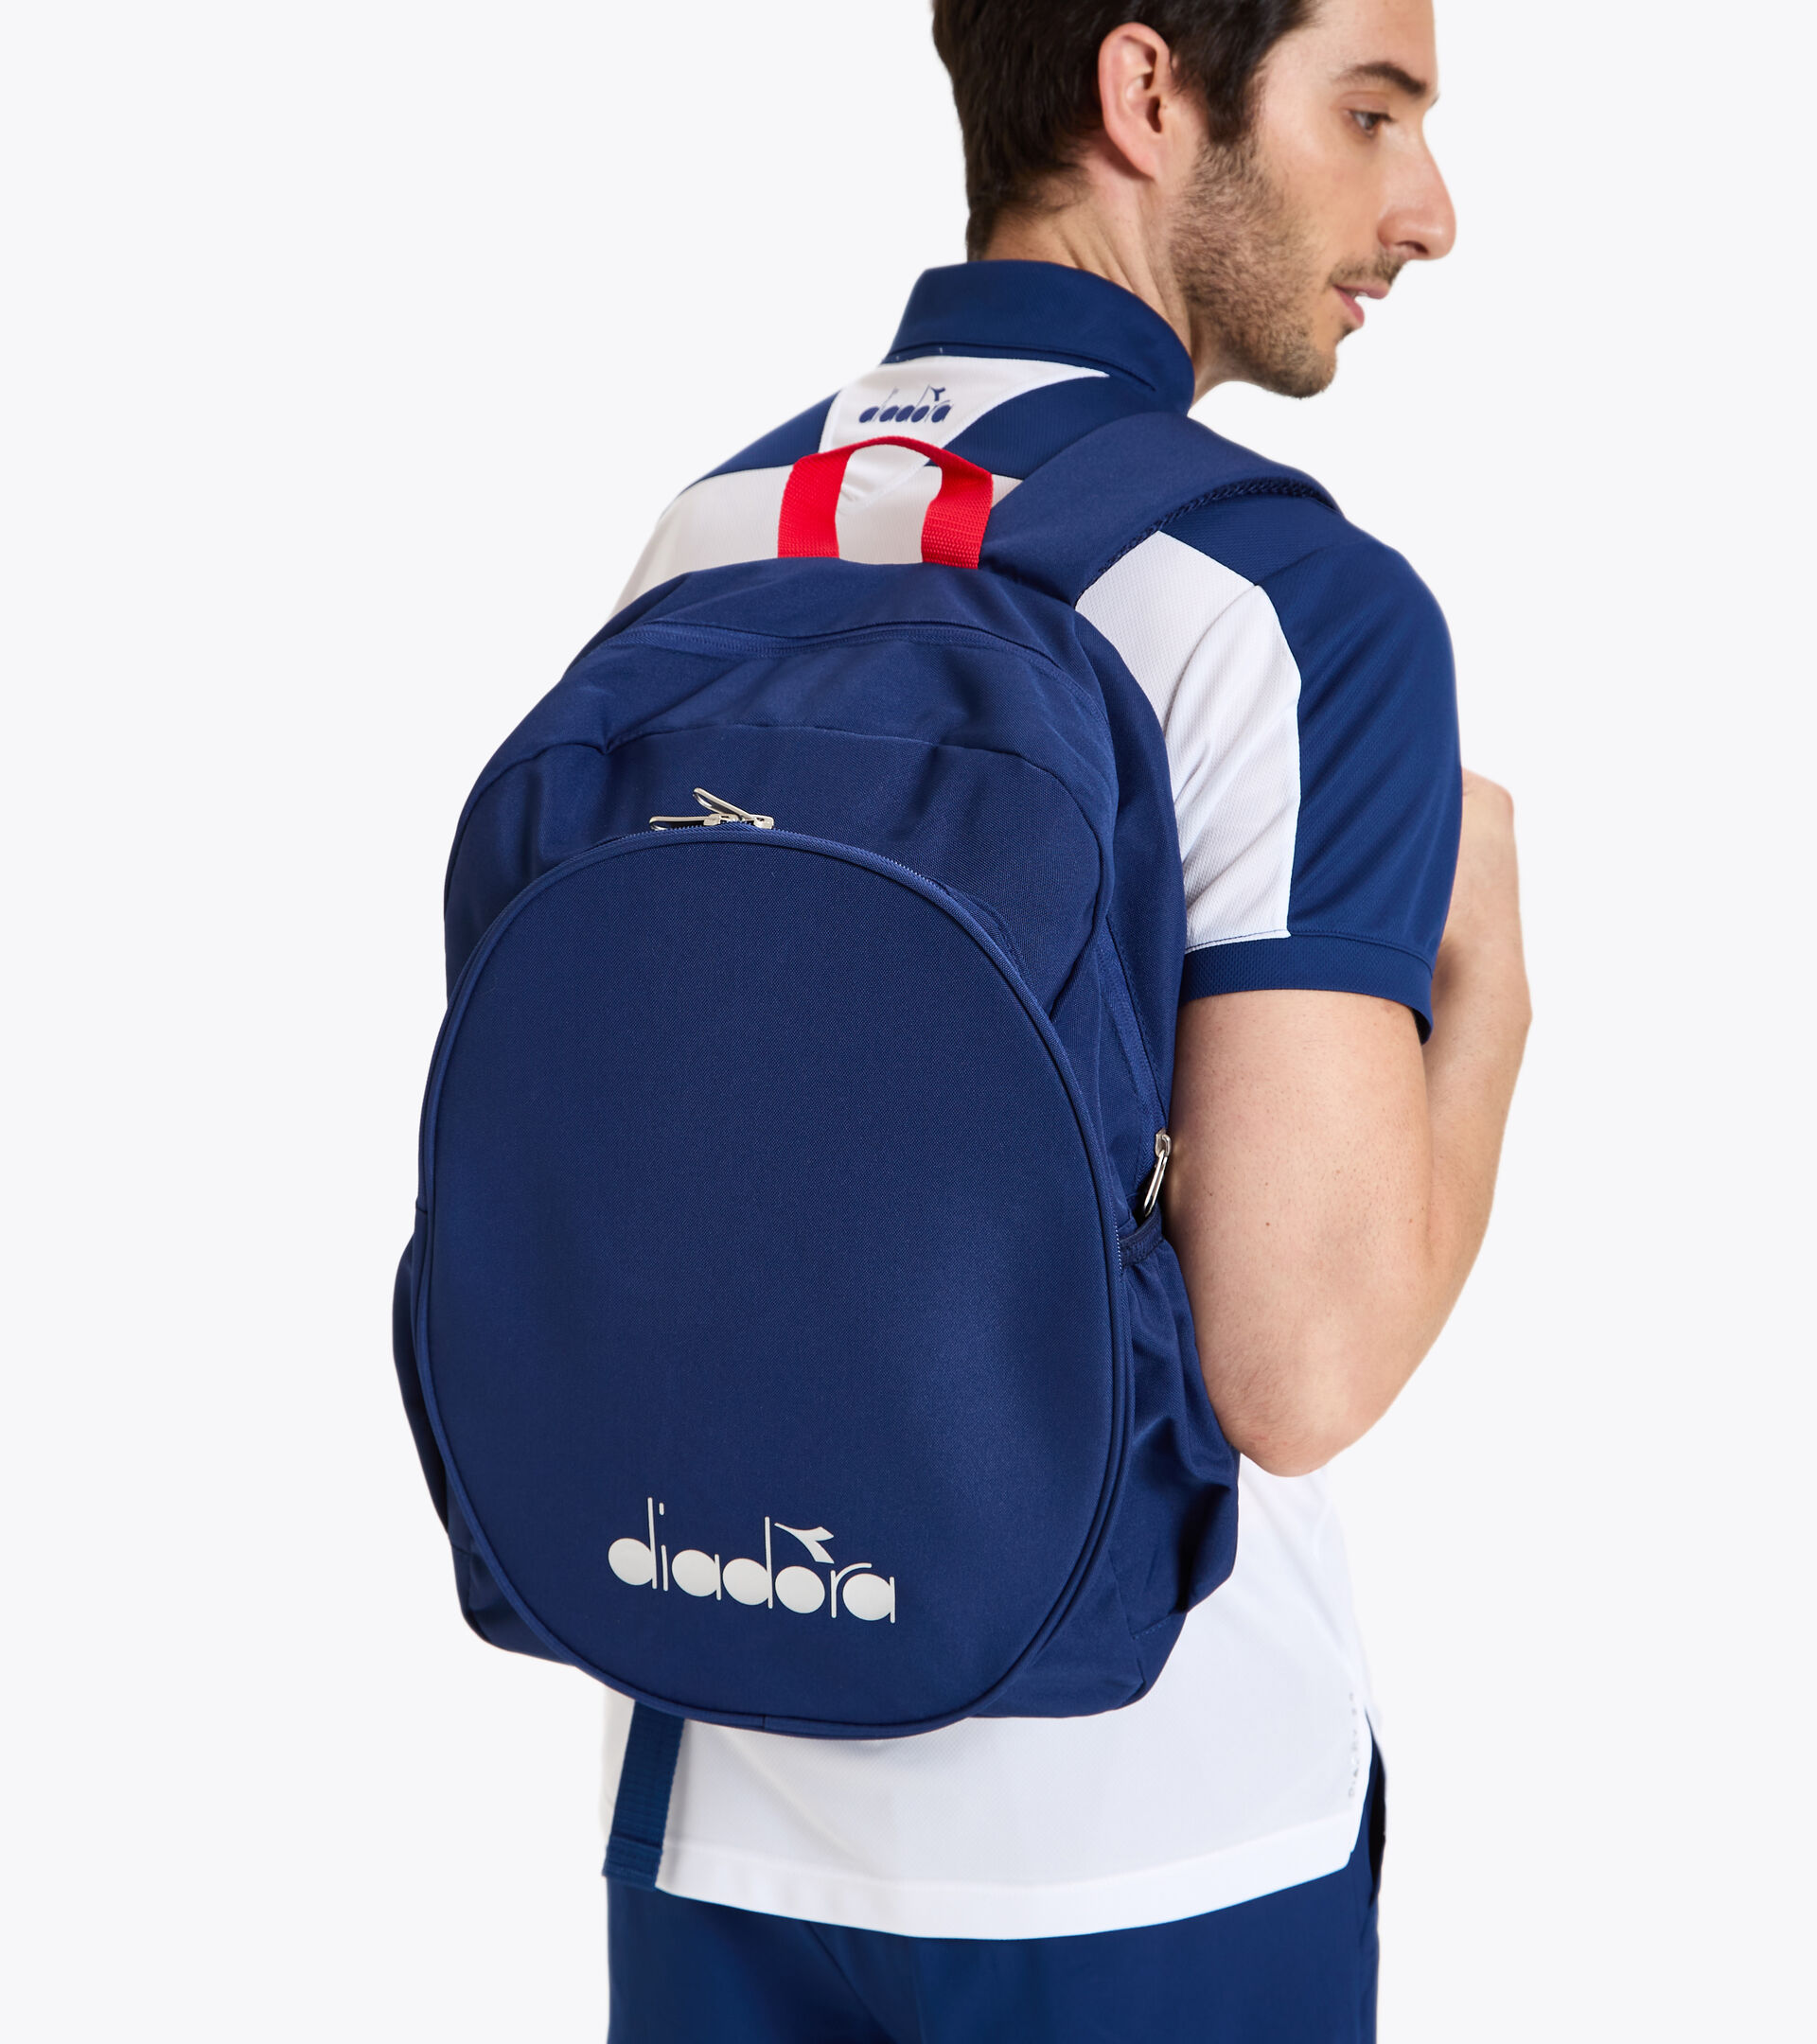 Tennis backpack BACKPACK TENNIS SALTIRE NAVY - Diadora